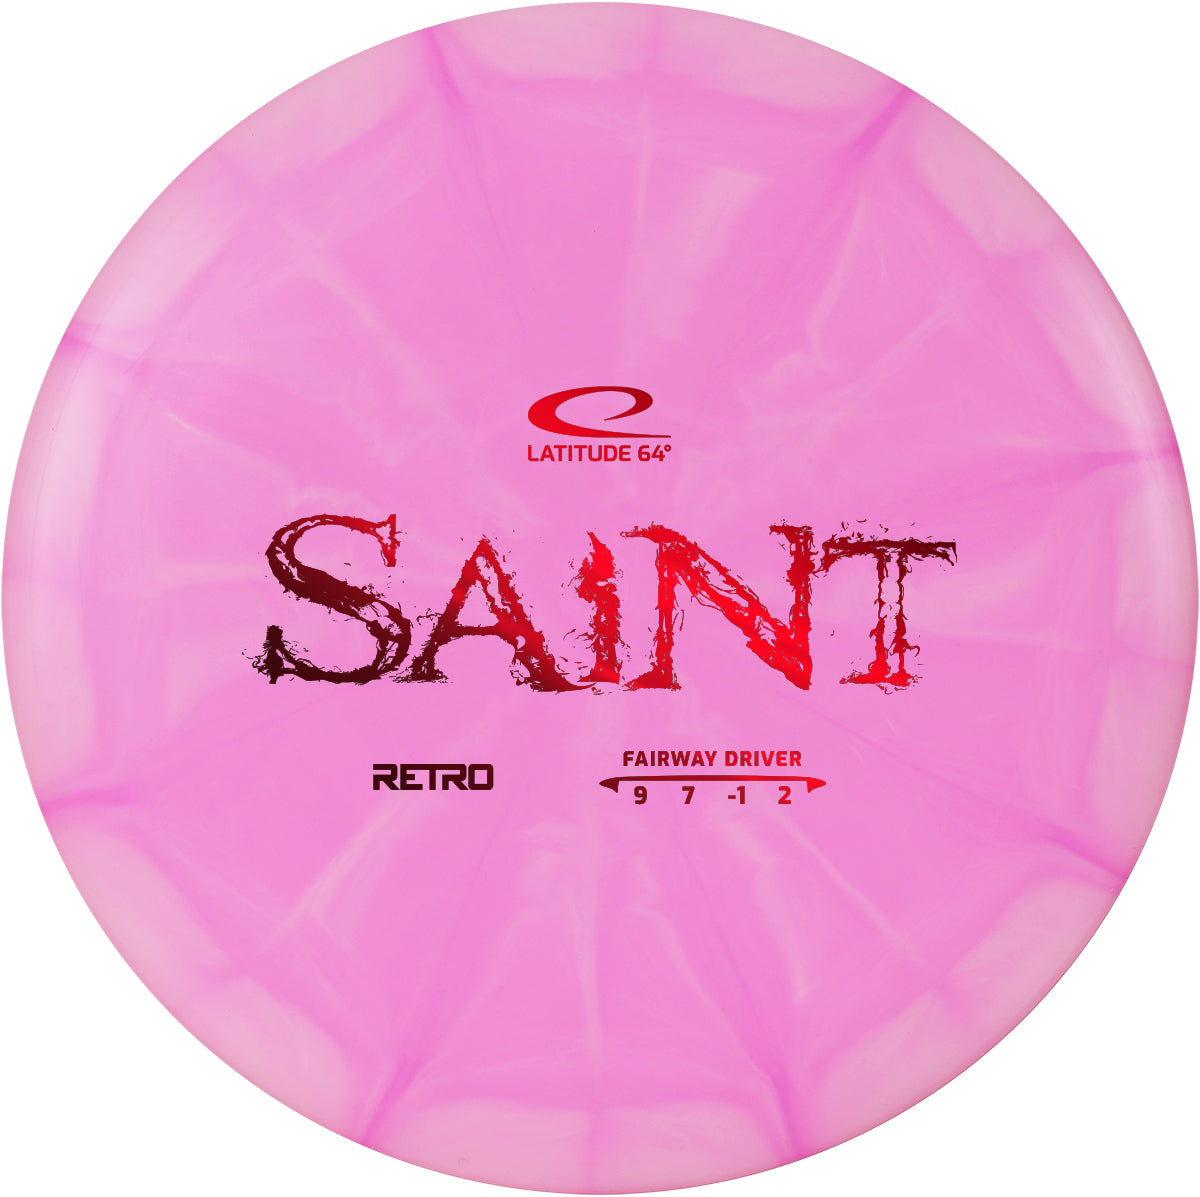 Retro Burst Saint (6917624561729)